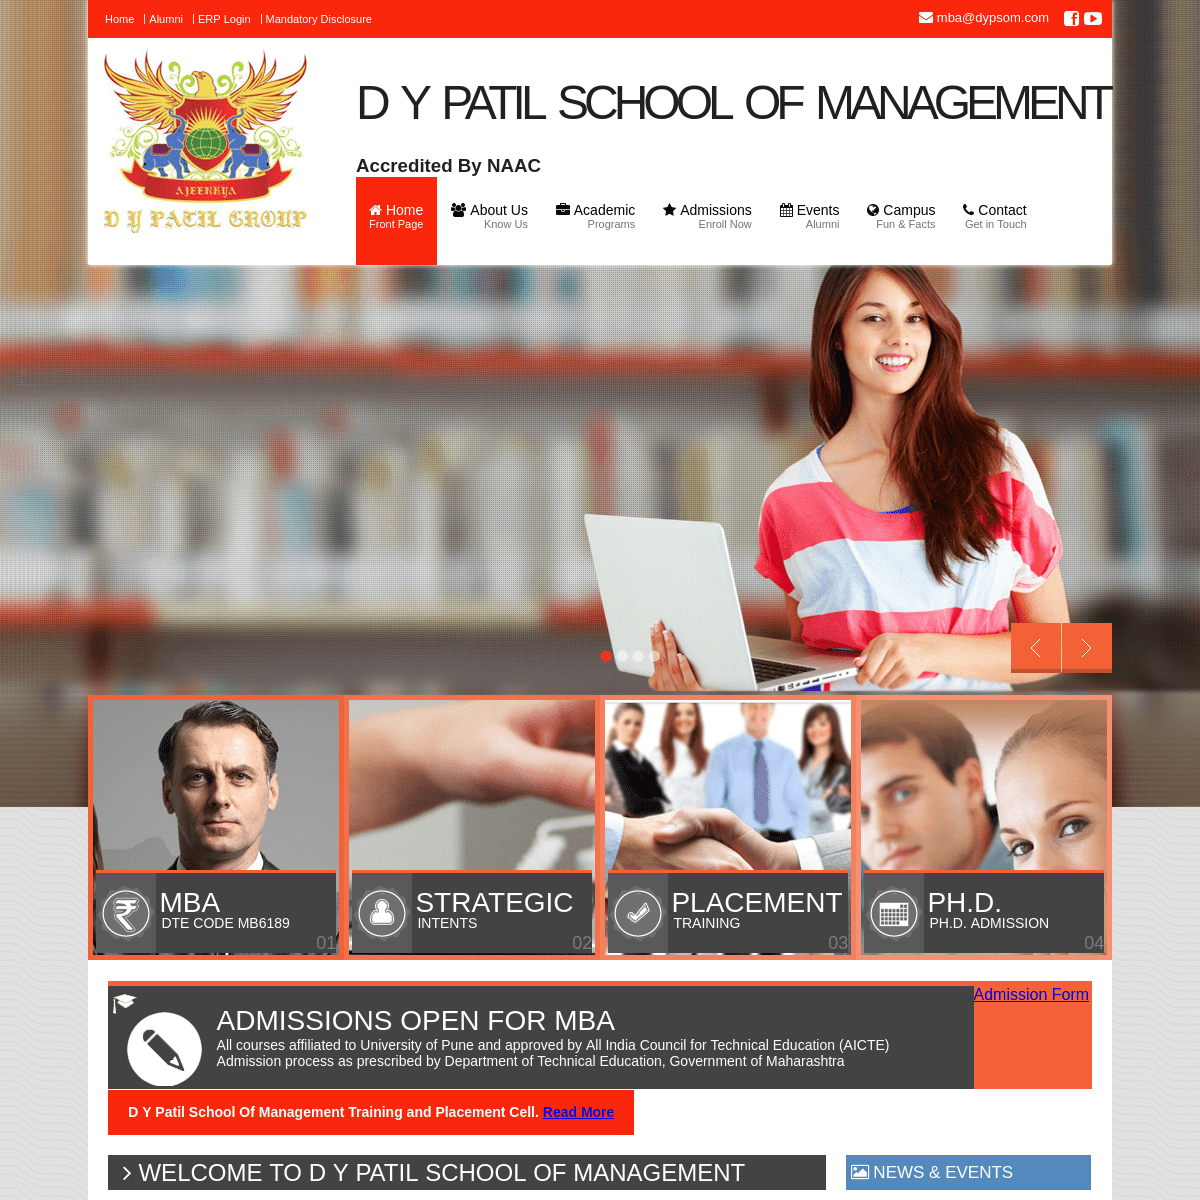 D Y PATIL SCHOOL OF MANAGEMENT Charholi (Bk), Via Lohgaon, 7 km from Airport, Pune- 412 105, Maharashtra - India